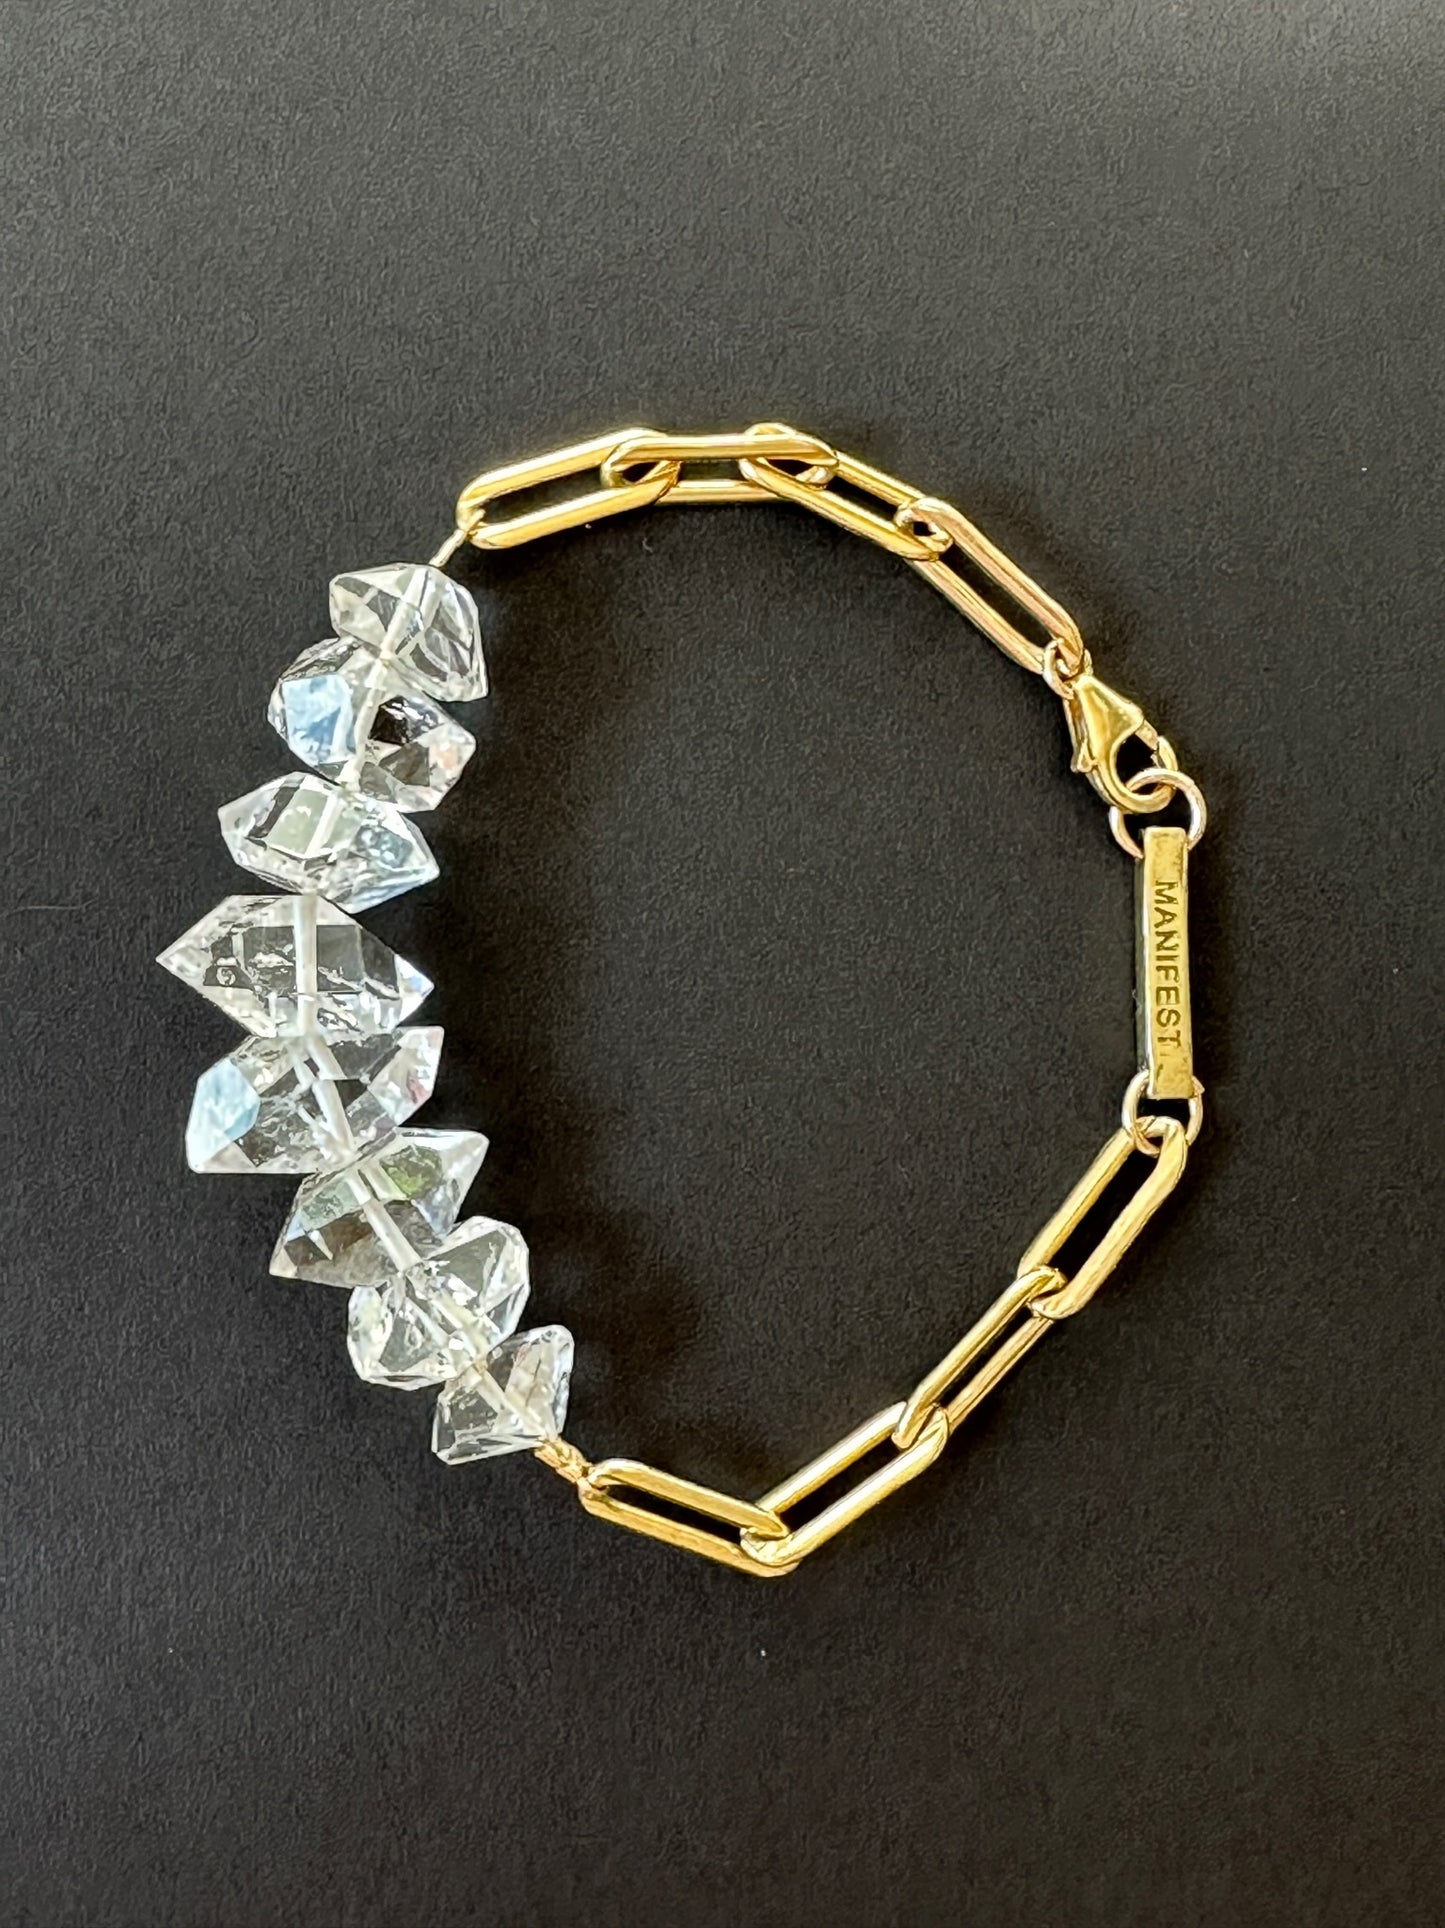 001. Infinity Herkimer Diamond Bracelet